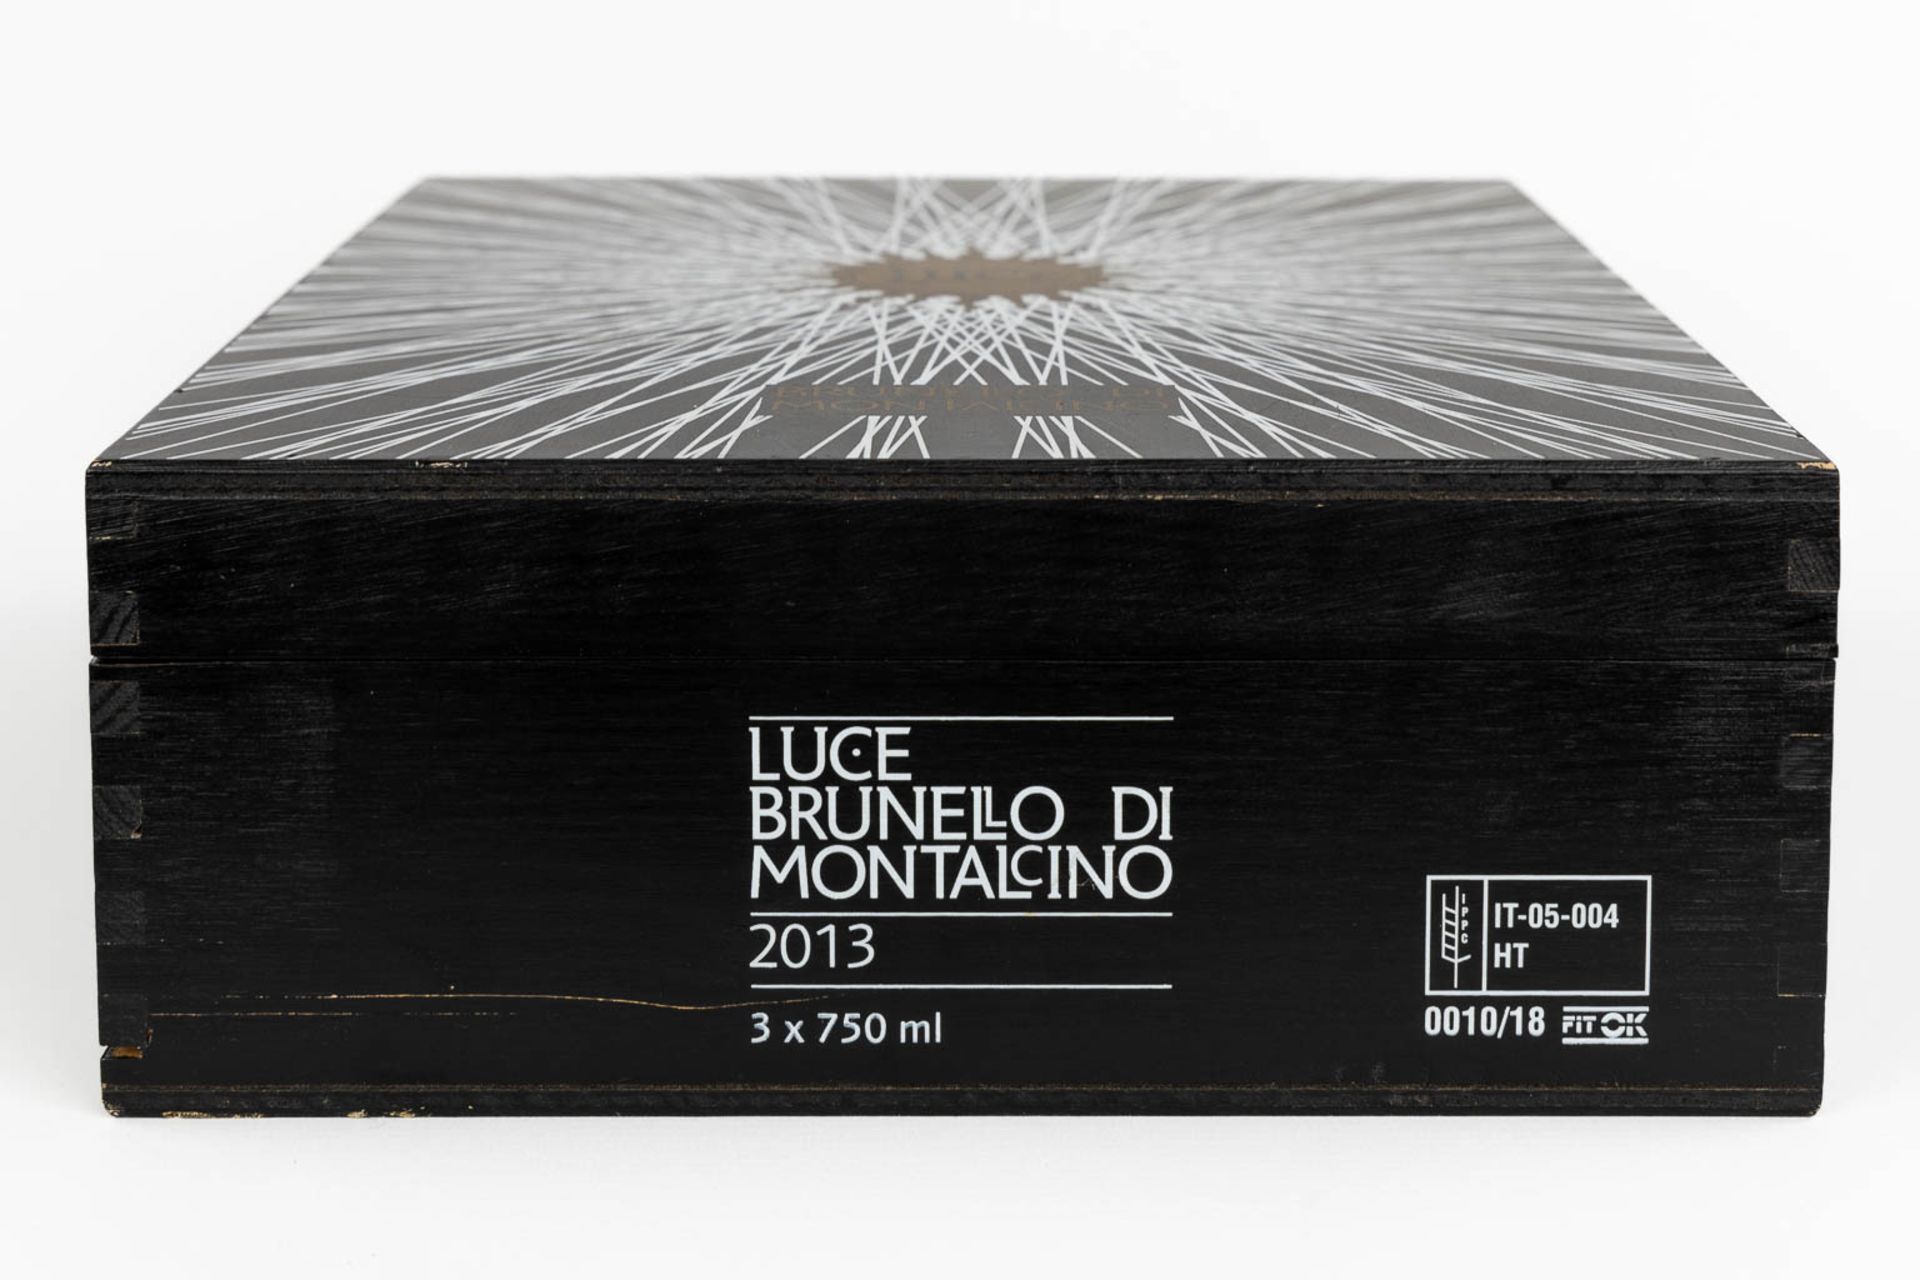 2013 Luce Brunello Di Montalcino (owc), 3 bottles. - Image 3 of 7